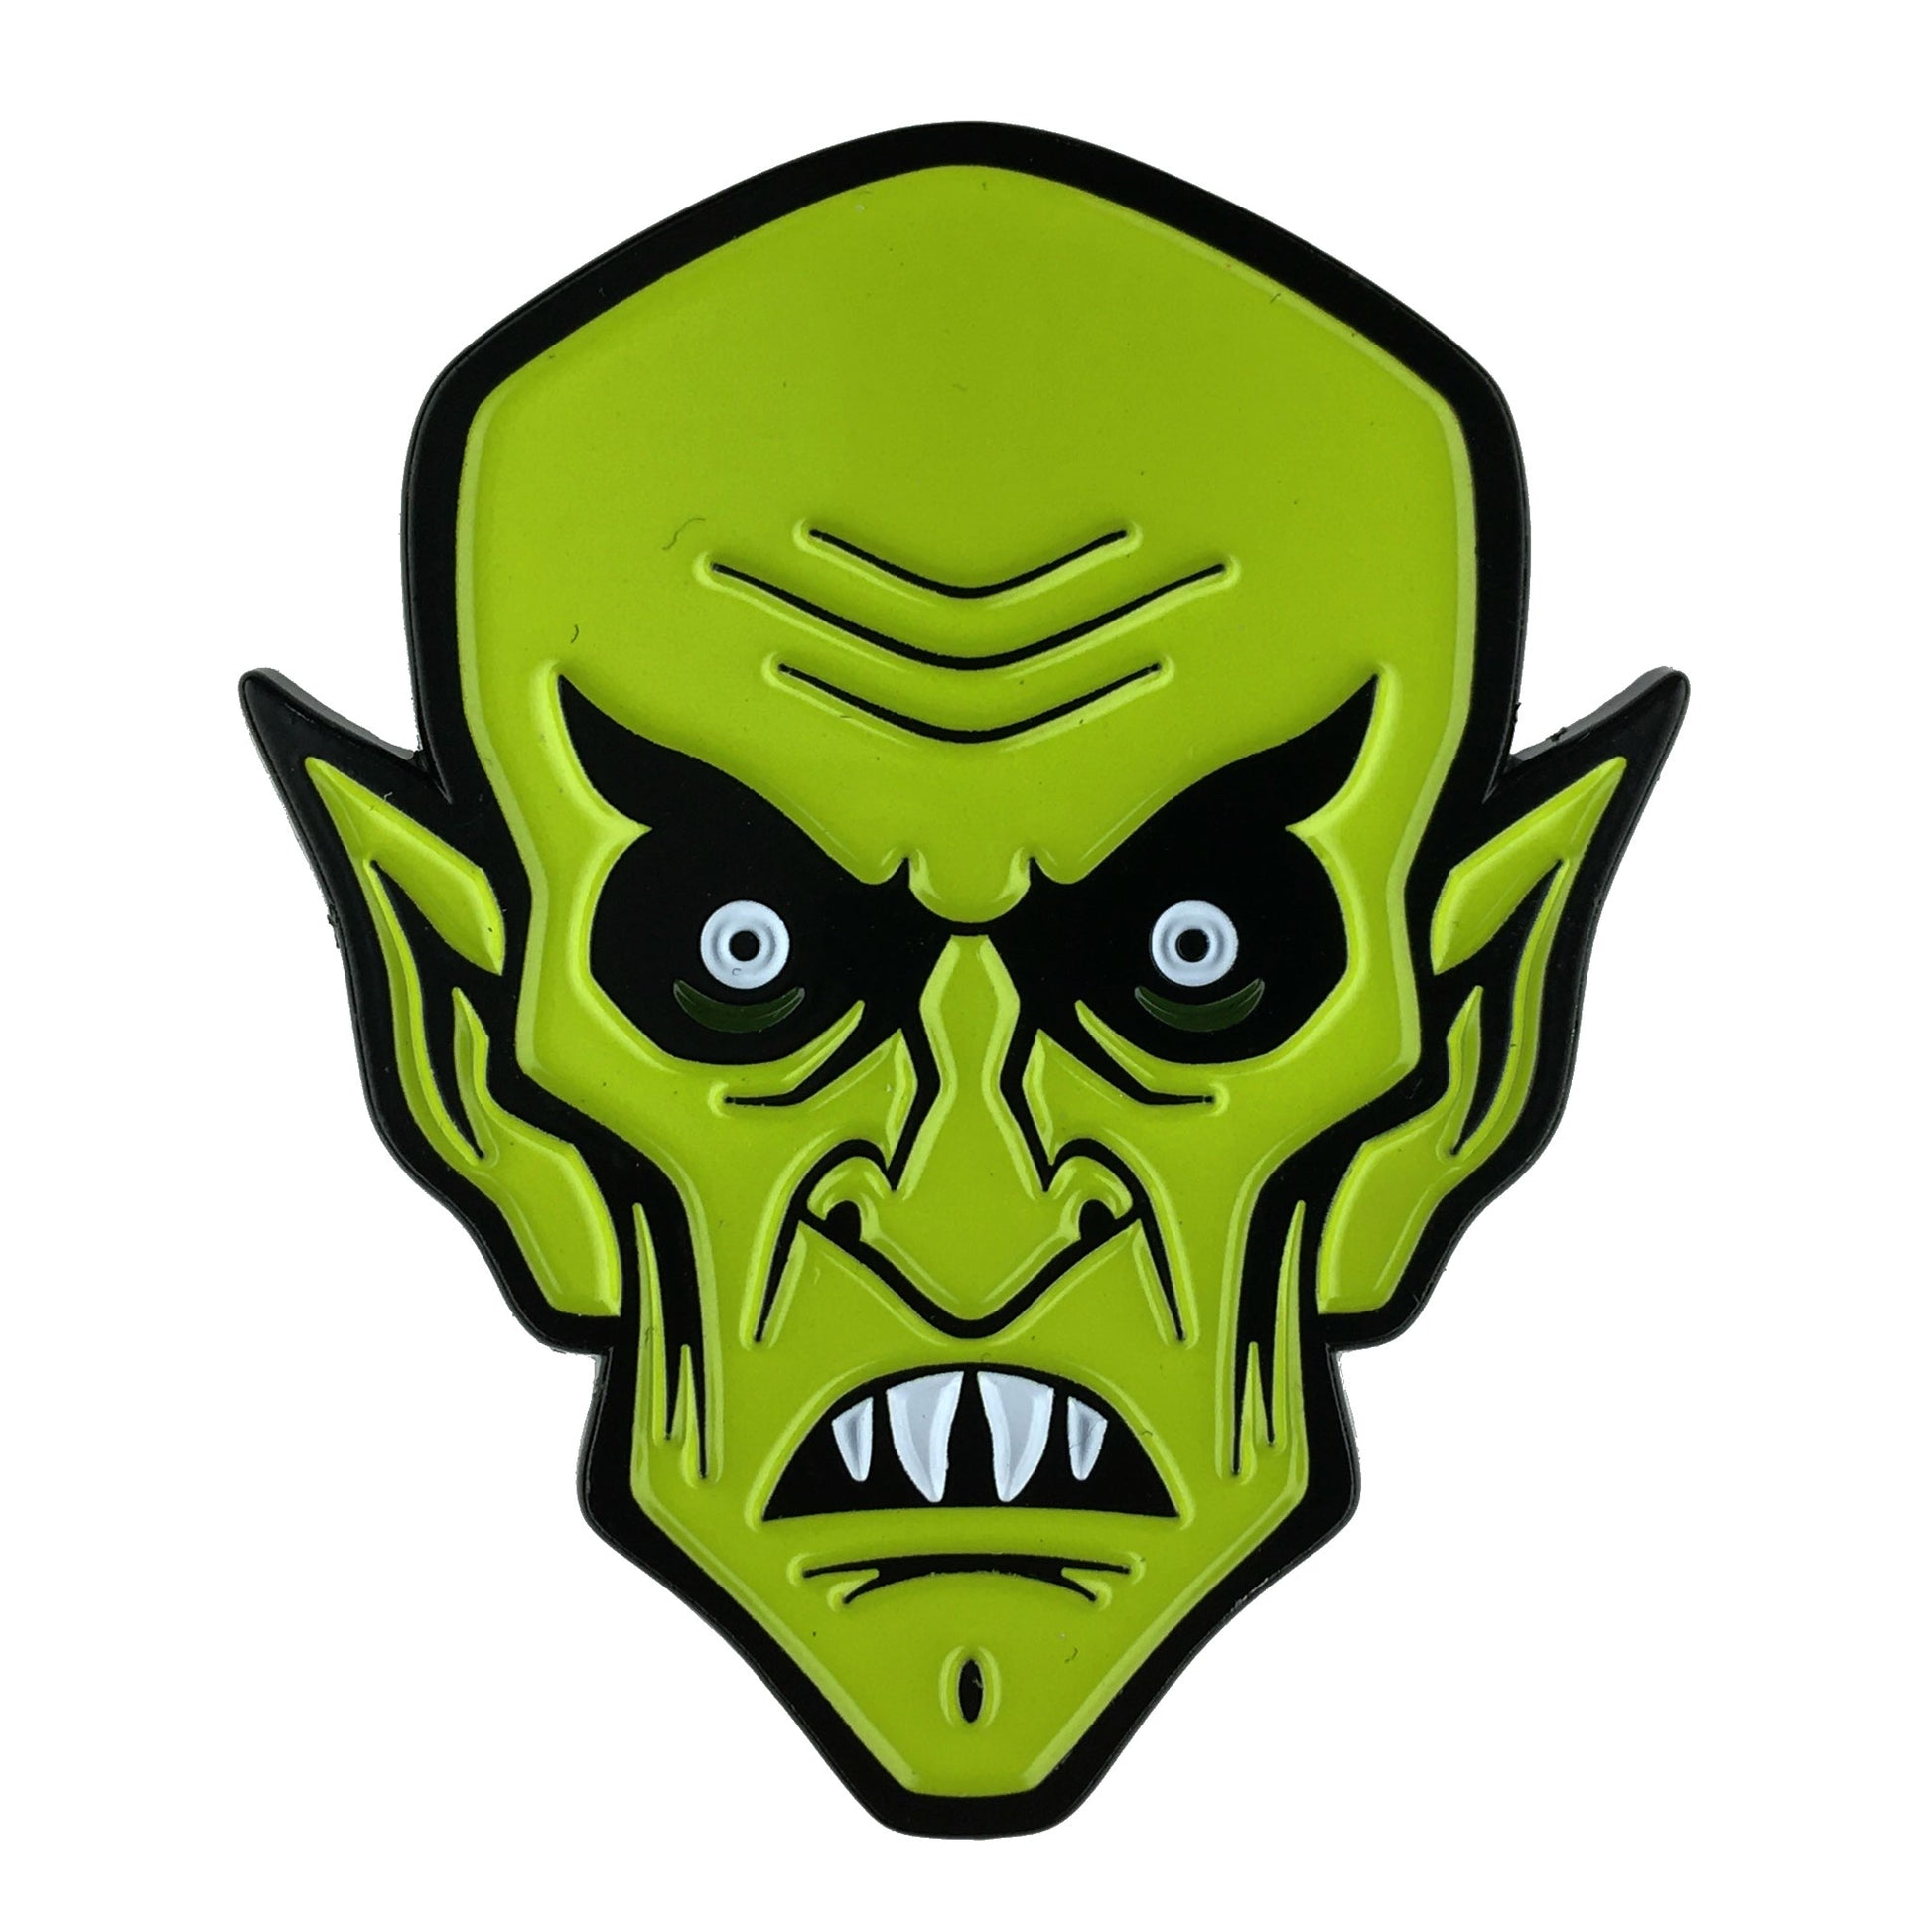 Orlok Nosferatu horror monster head enamel pin by Monsterologist